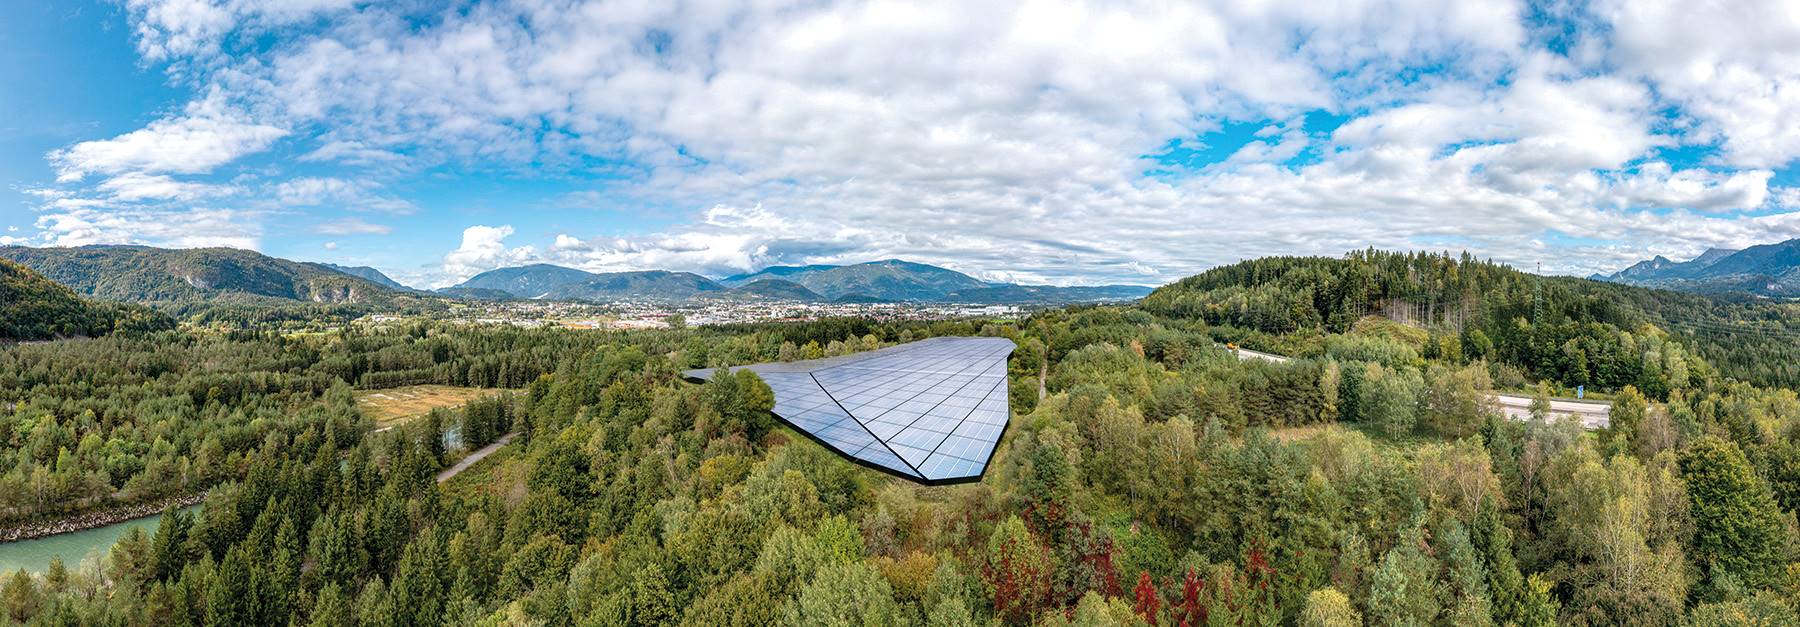 Panoramafoto einer Photovoltaikanlage